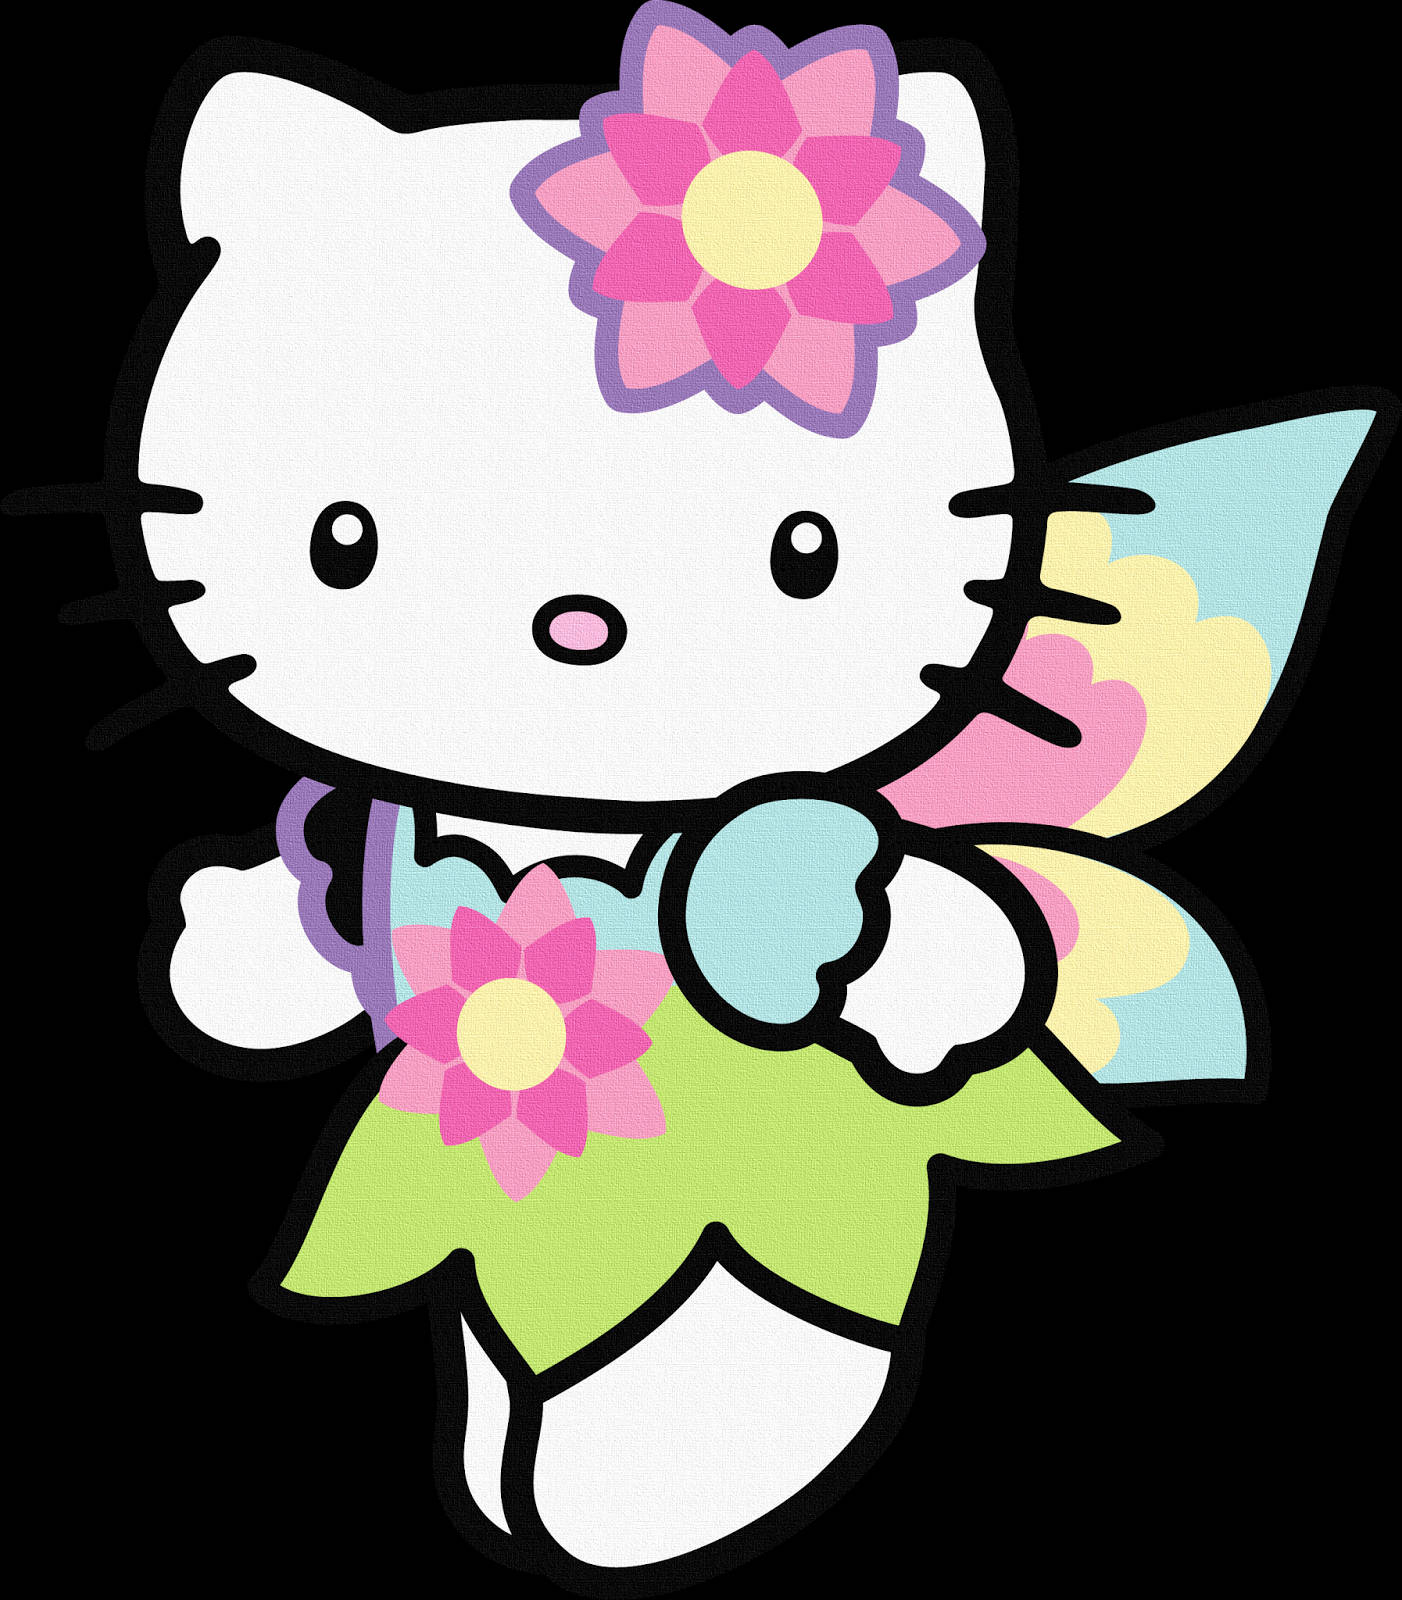 Magical Fairy Cartoon Hello Kitty Pfp Picture